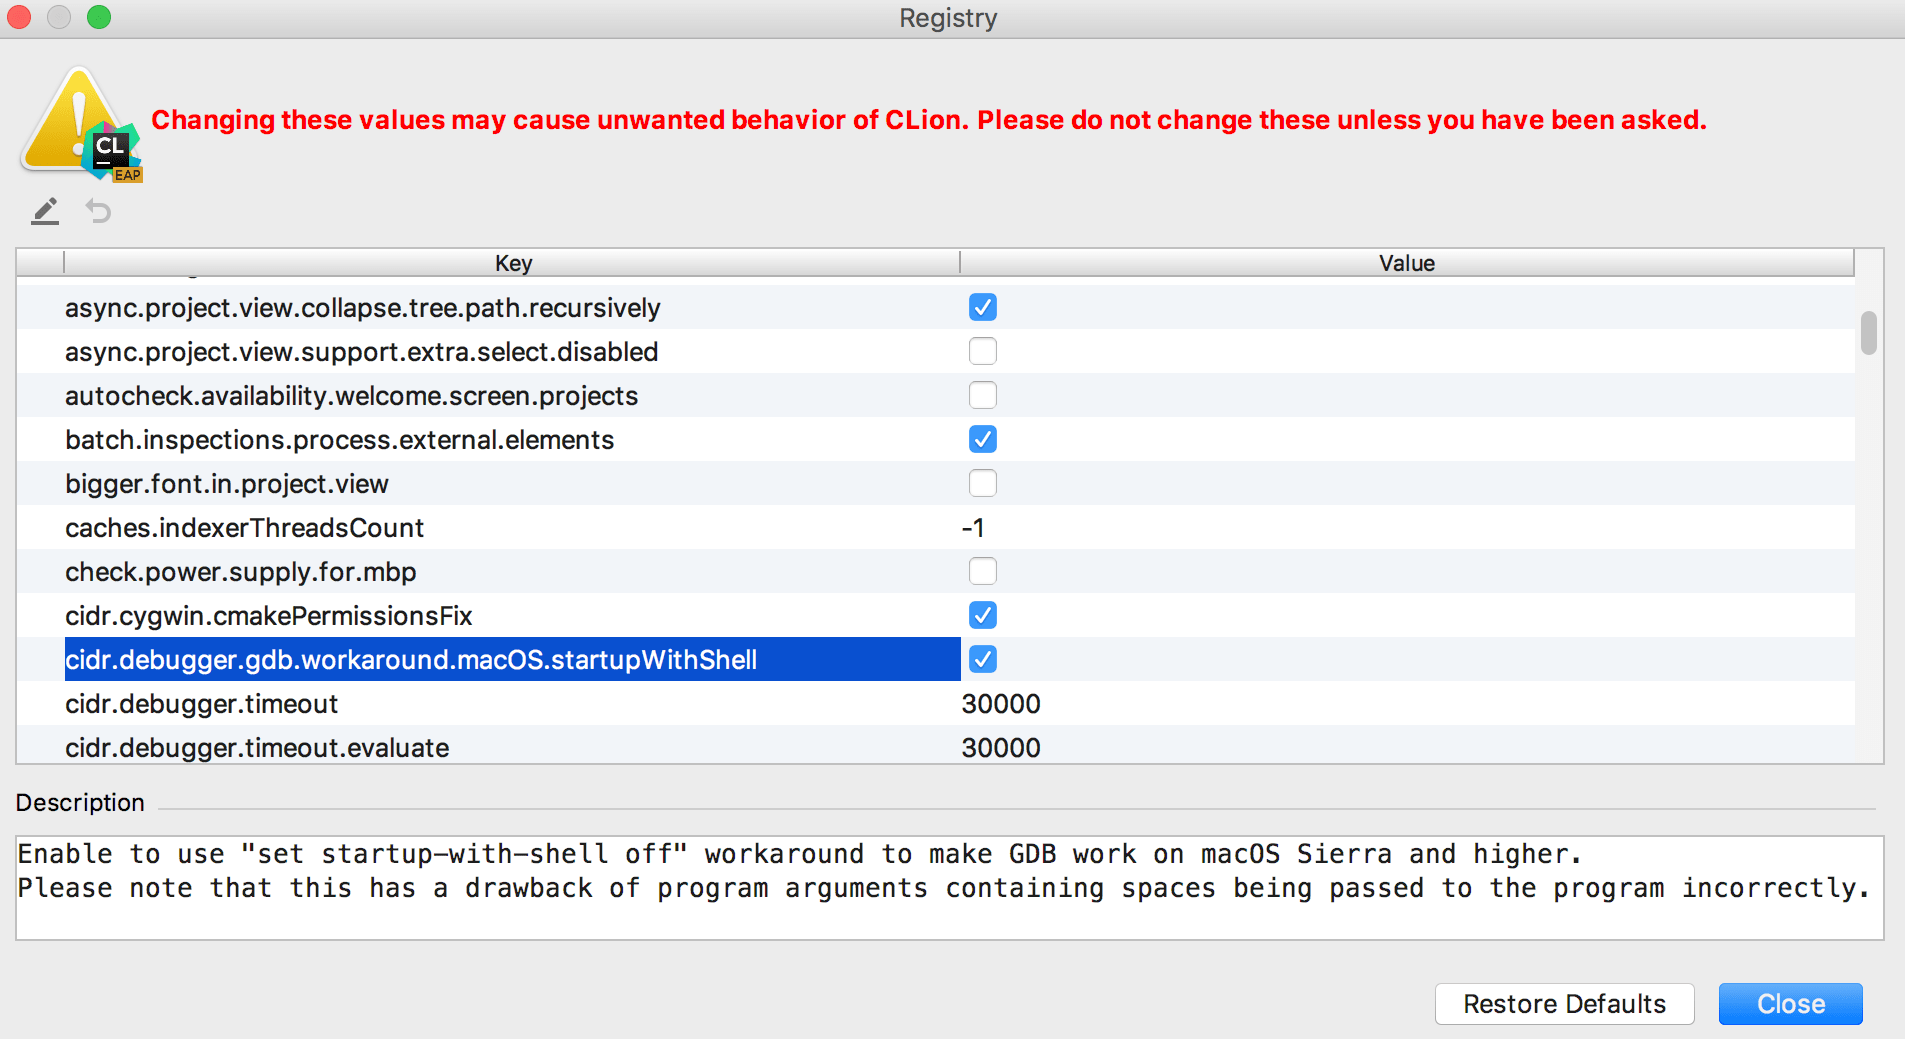 Enabling the cidr.debugger.gdb.workaround.macOS.startupWithShell registry key